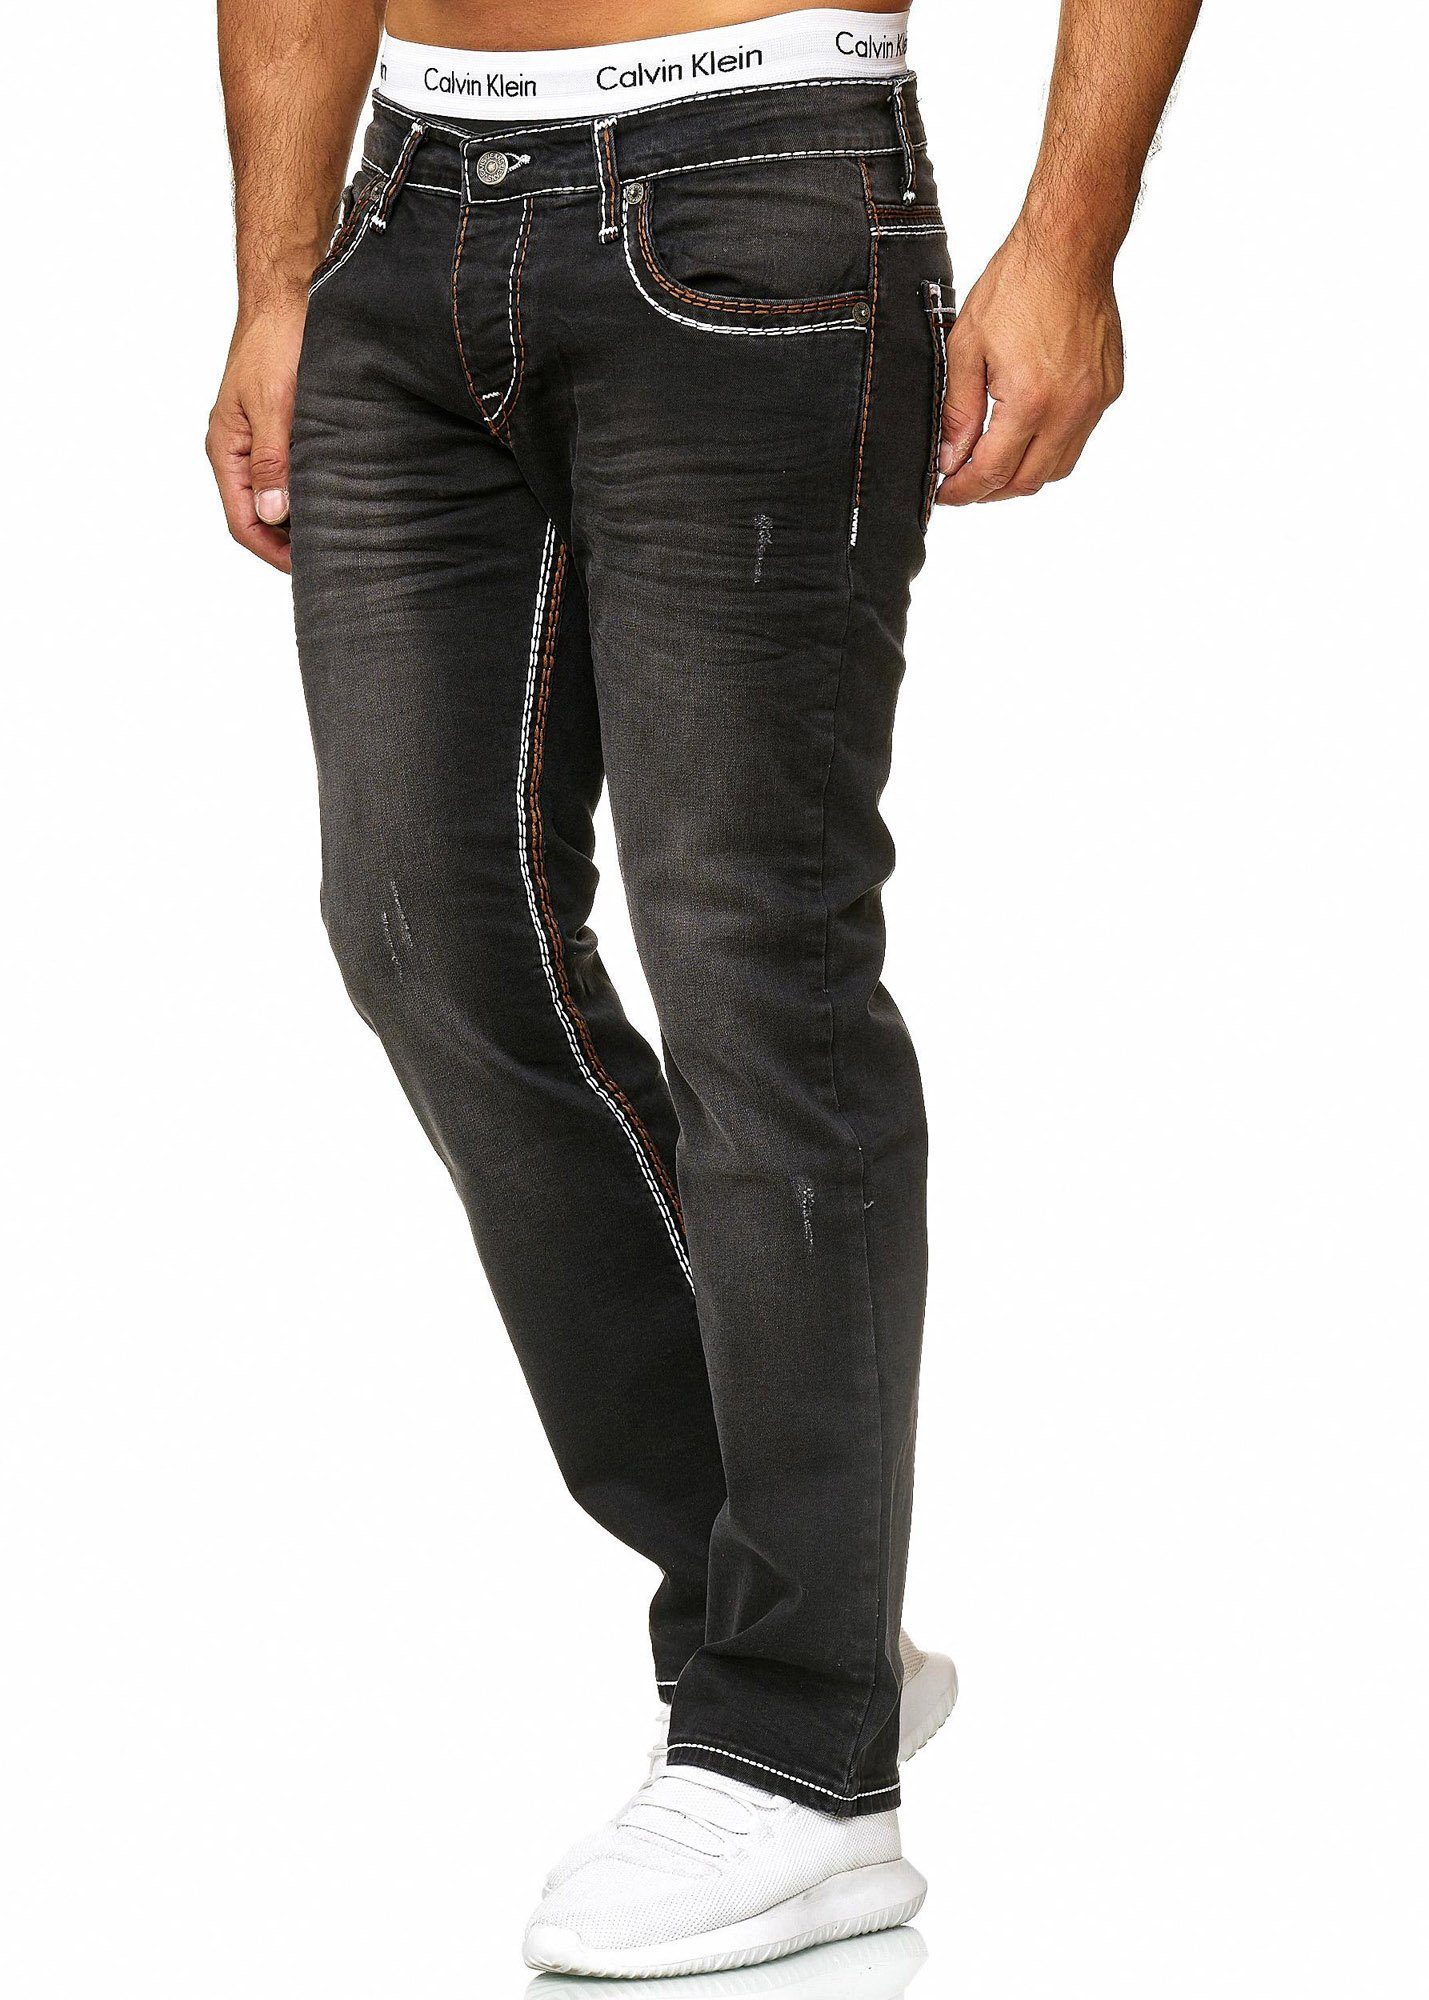 Regular Code47 Jeans Denim Code47 Straight Used Herren Fit Regular-fit-Jeans Cut Design